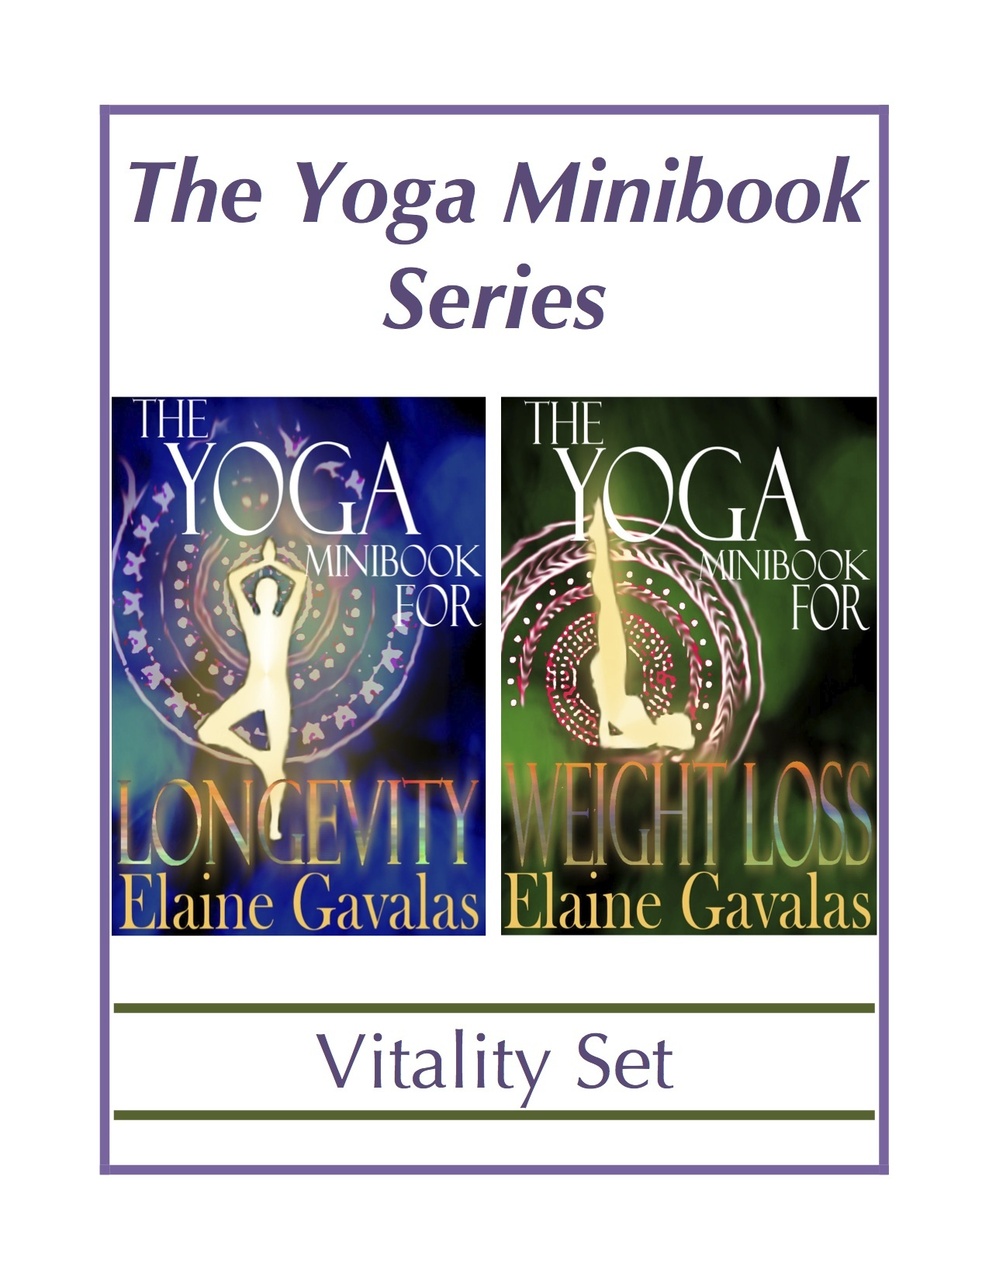 DR. ELAINE GAVALAS - THE YOGA MINIBOOK FOR WEIGHT LOSS & VITALITY SET